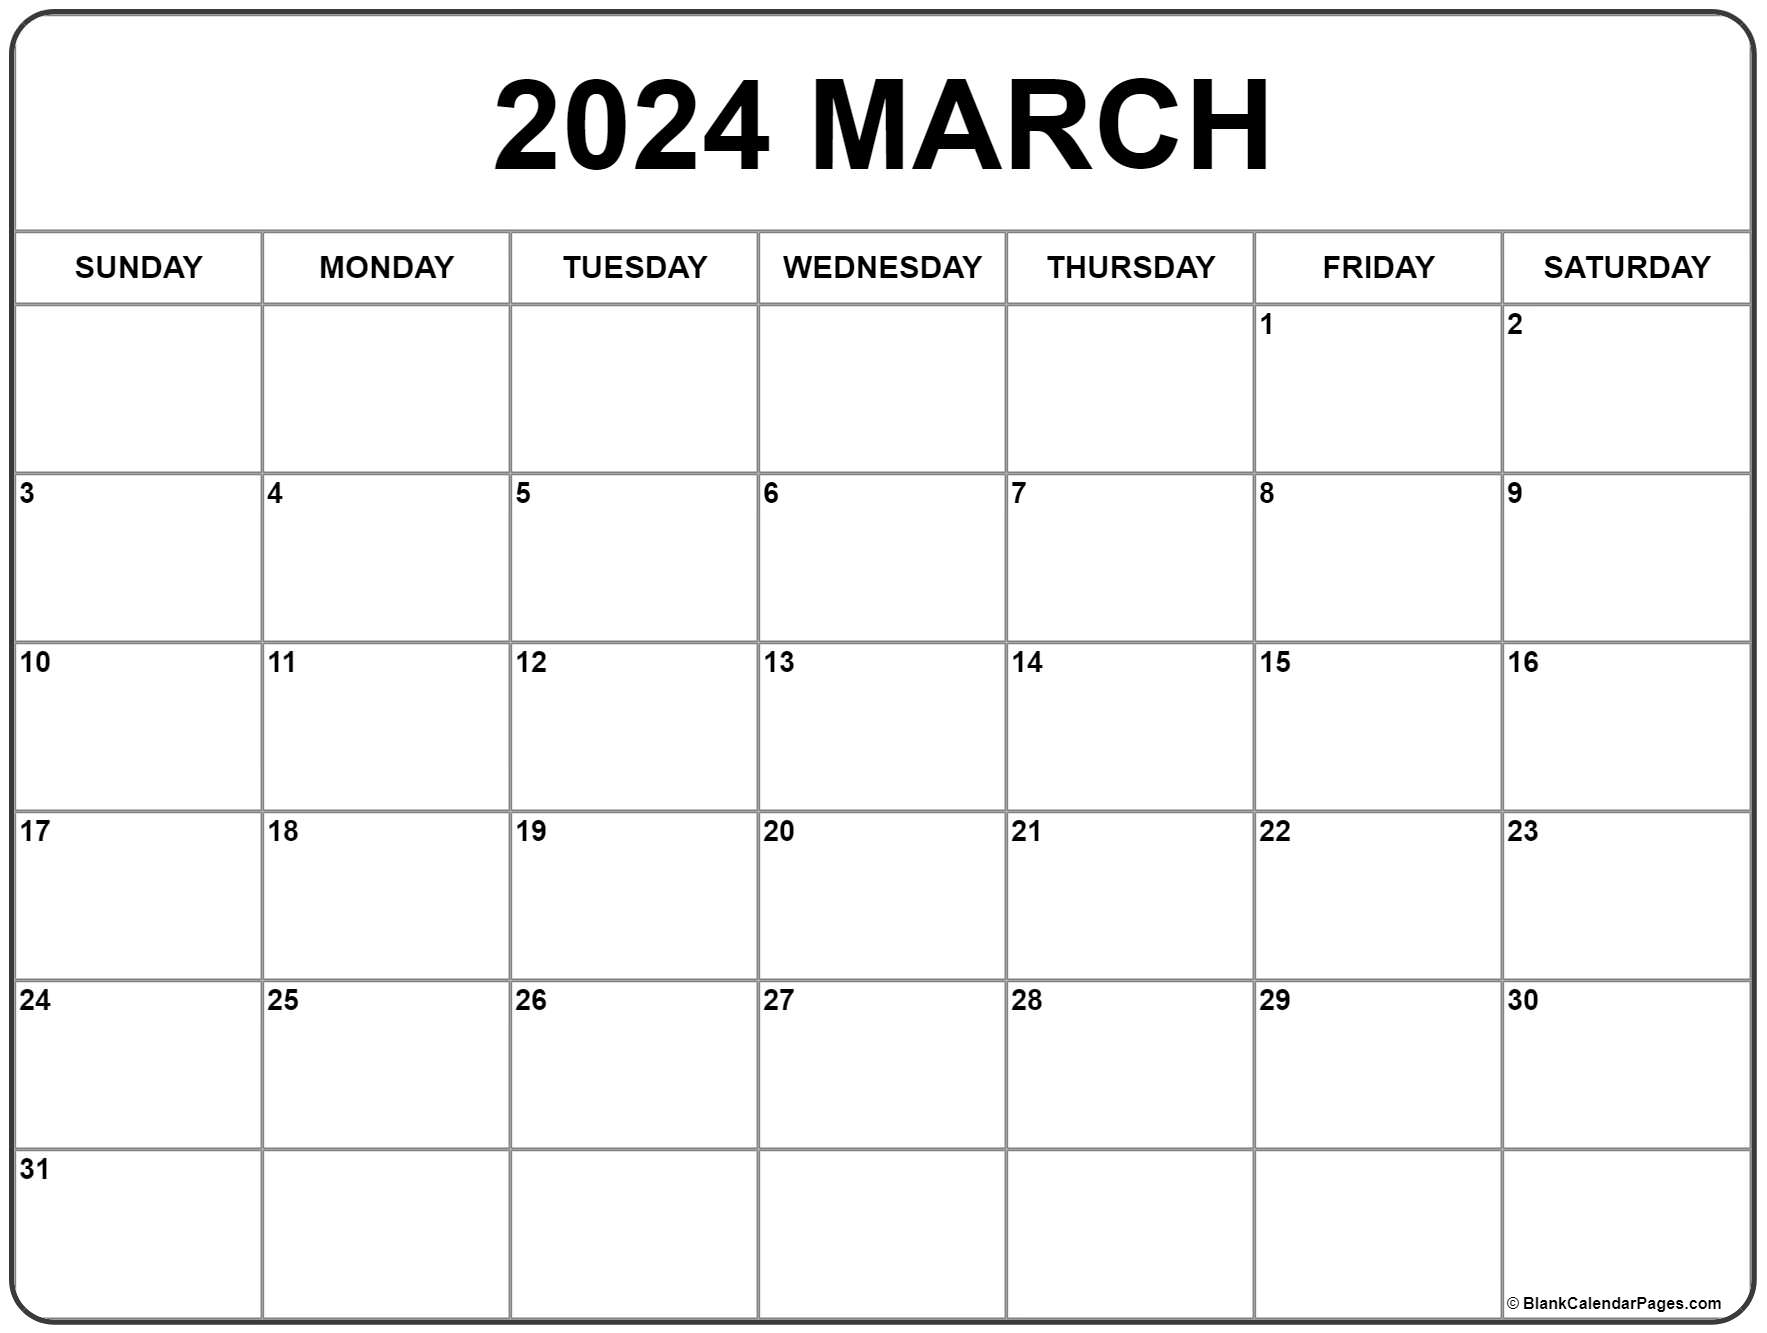 Printable March 2021 Calendar March 2021 calendar | free printable monthly calendars